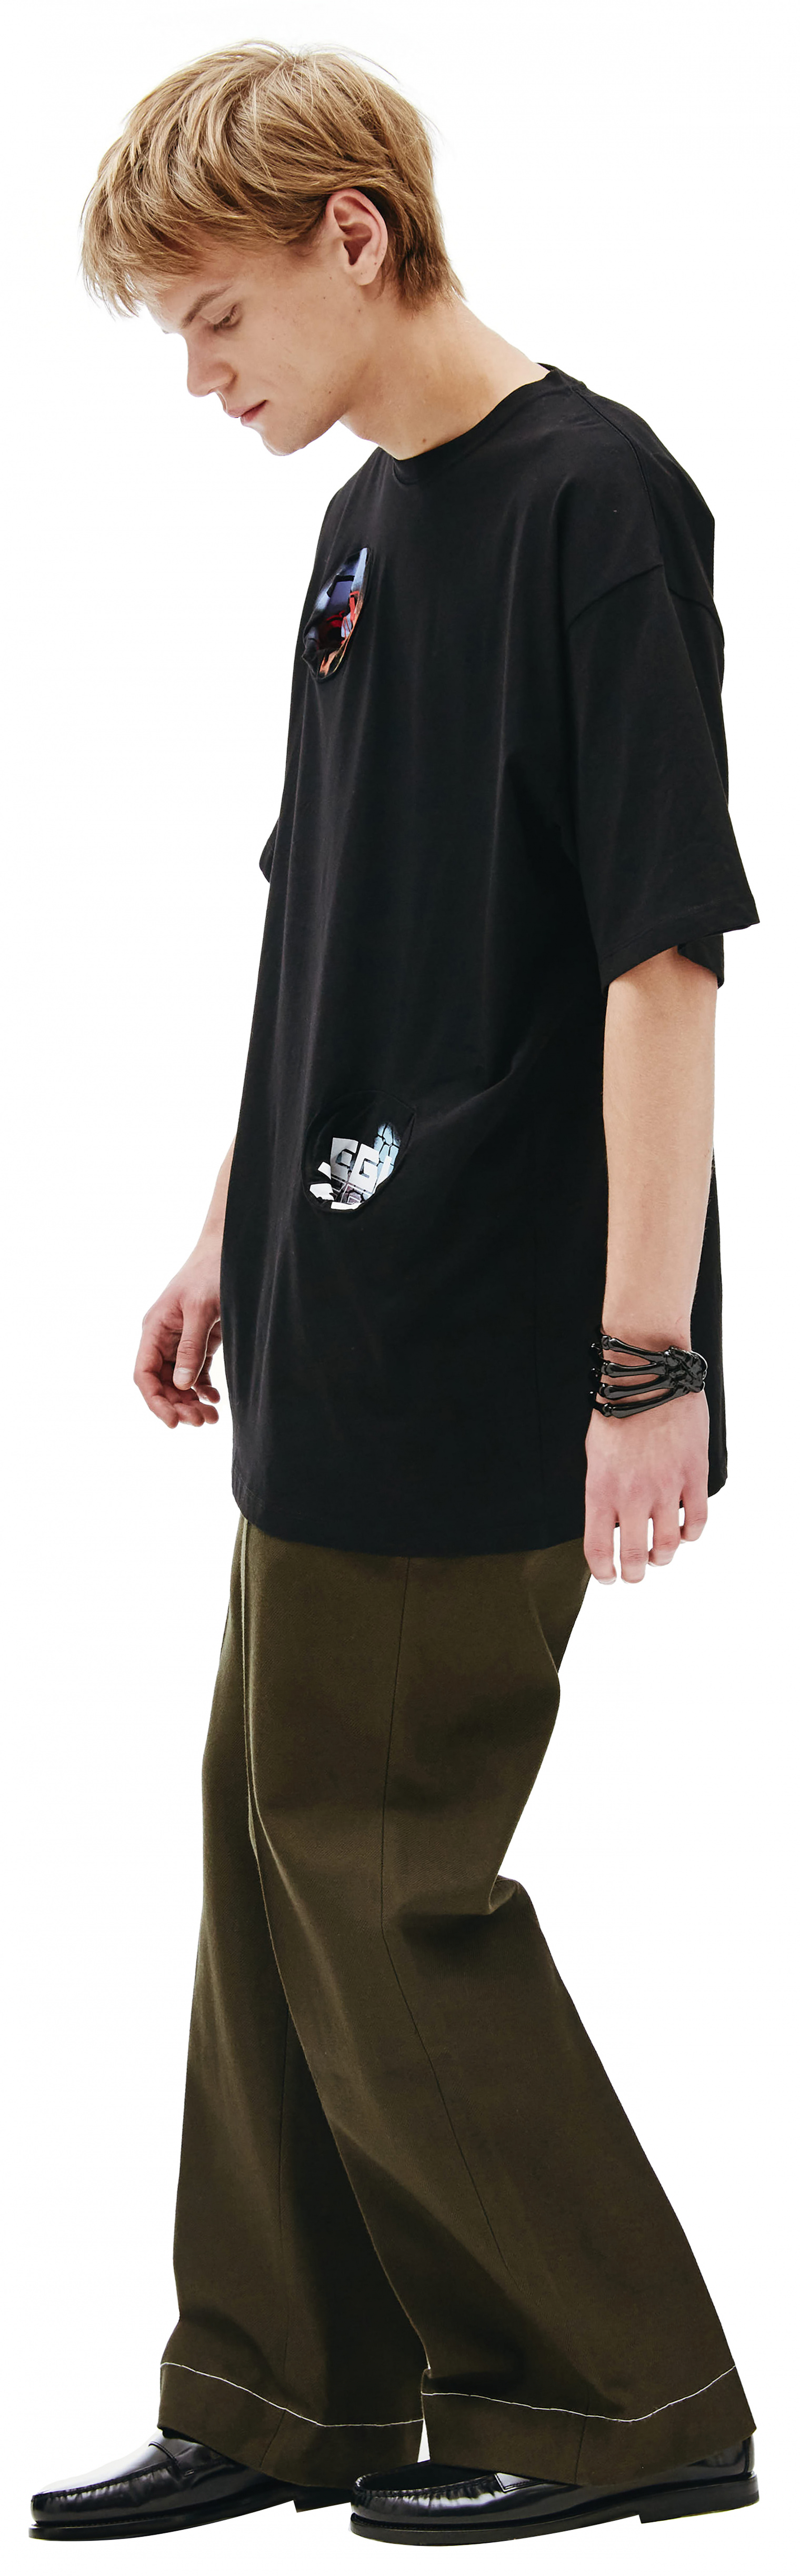 Raf Simons Oversized T-Shirt with Printed Pocket